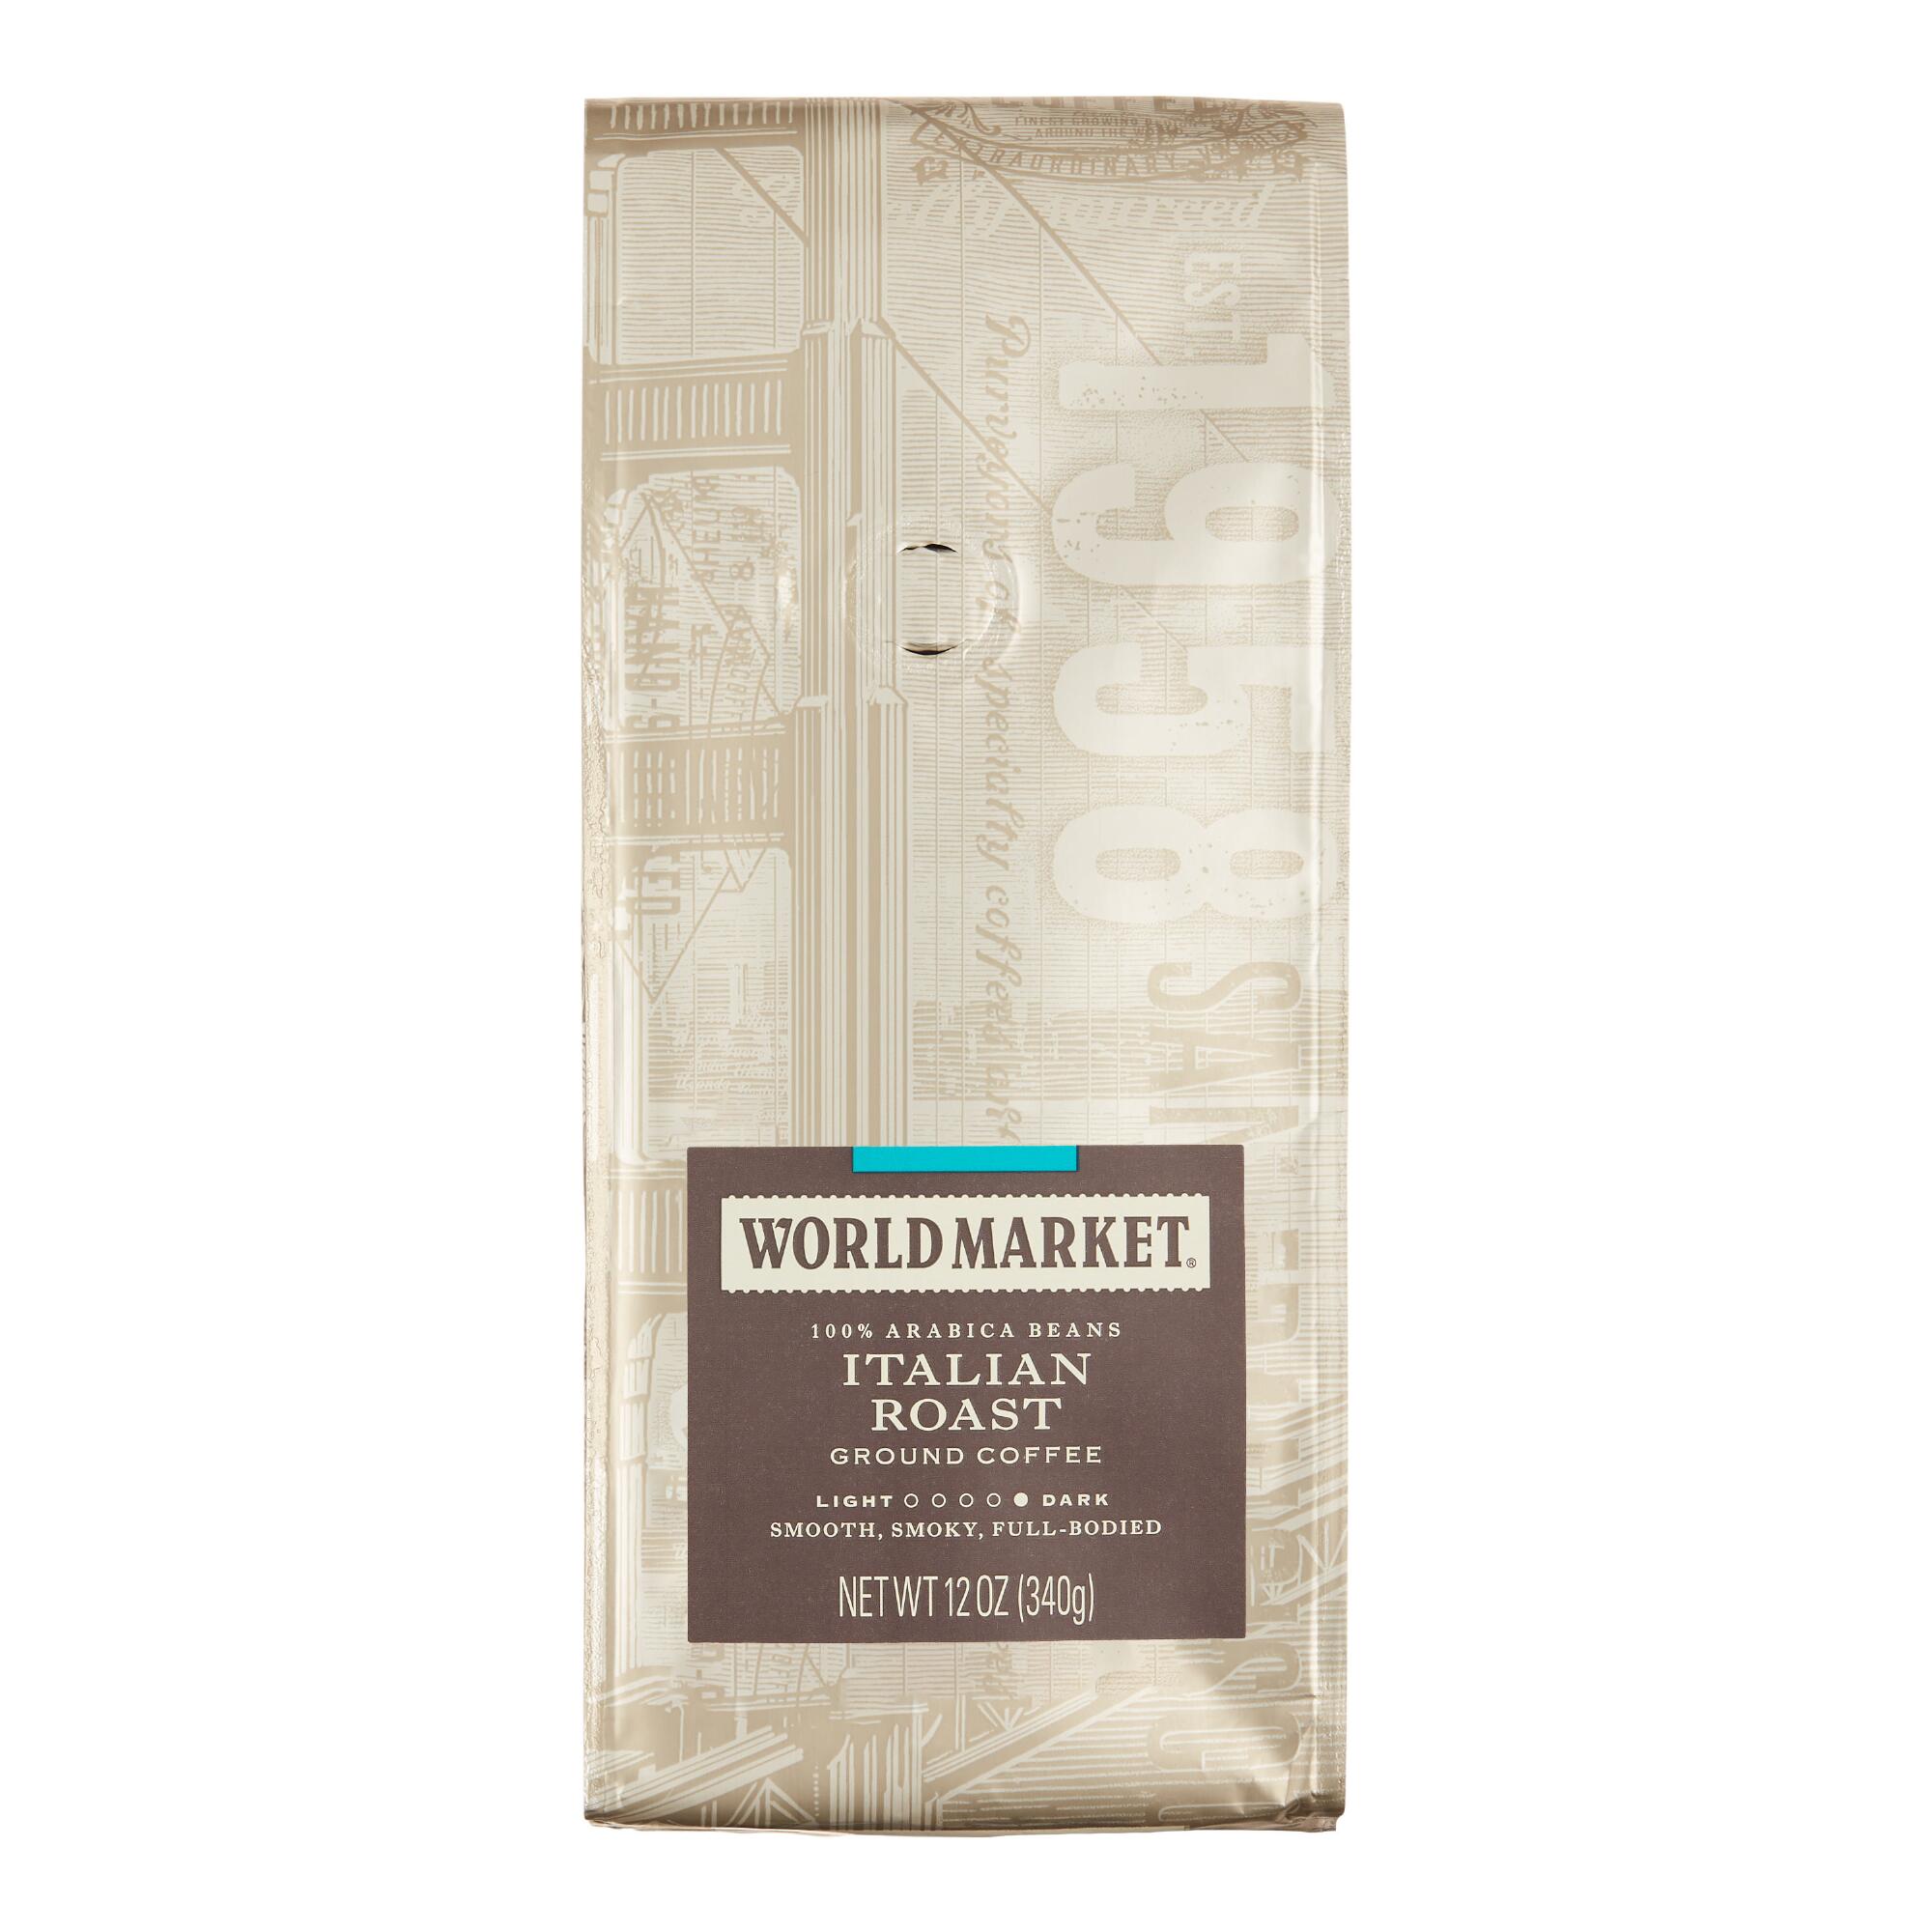 12 Oz. World Market Italian Roast Ground Coffee Set Of 6 by World Market